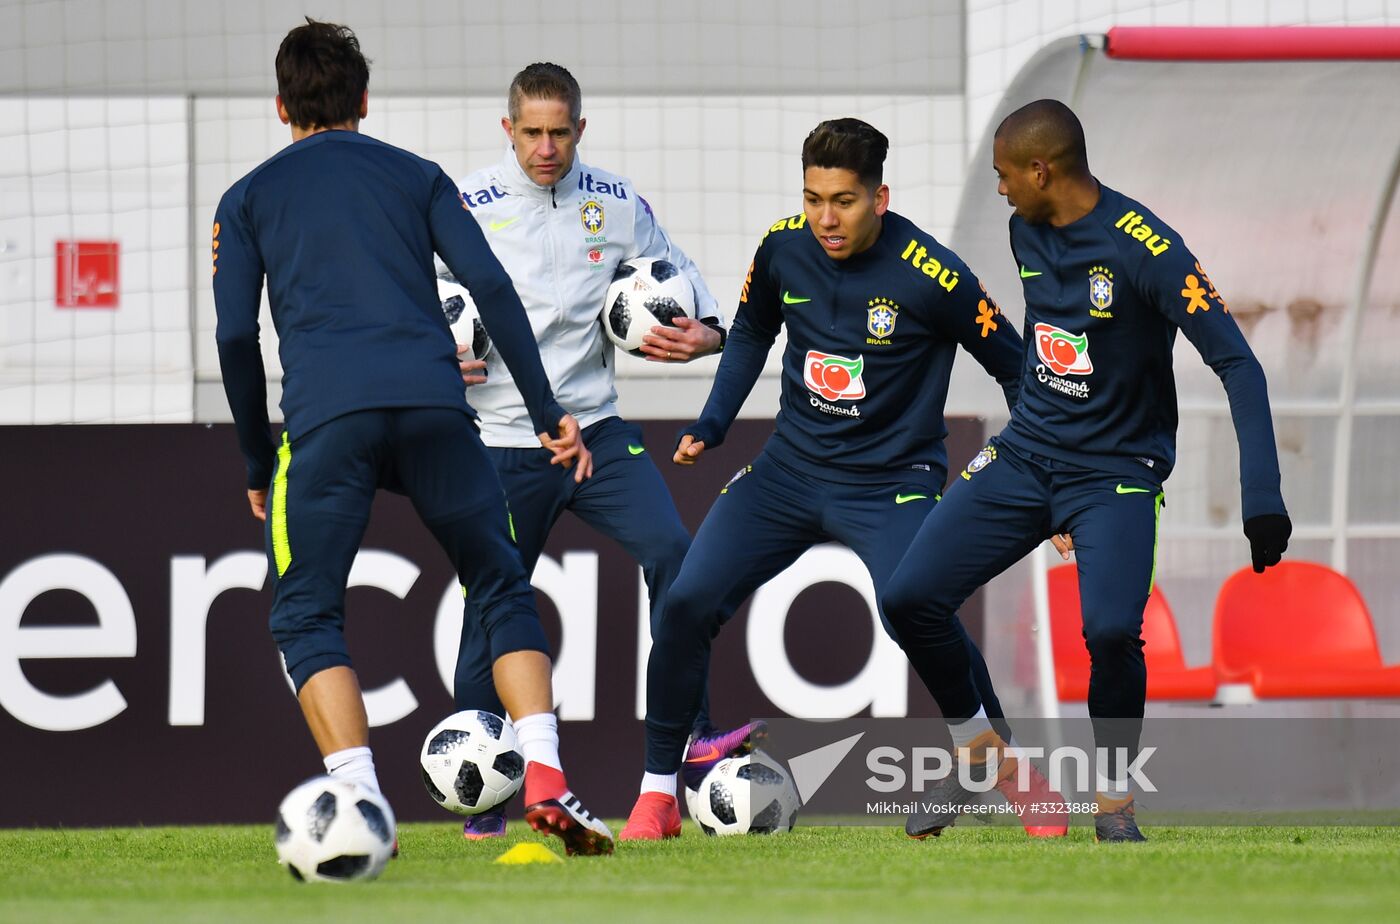 Football. Brazilian team's training session